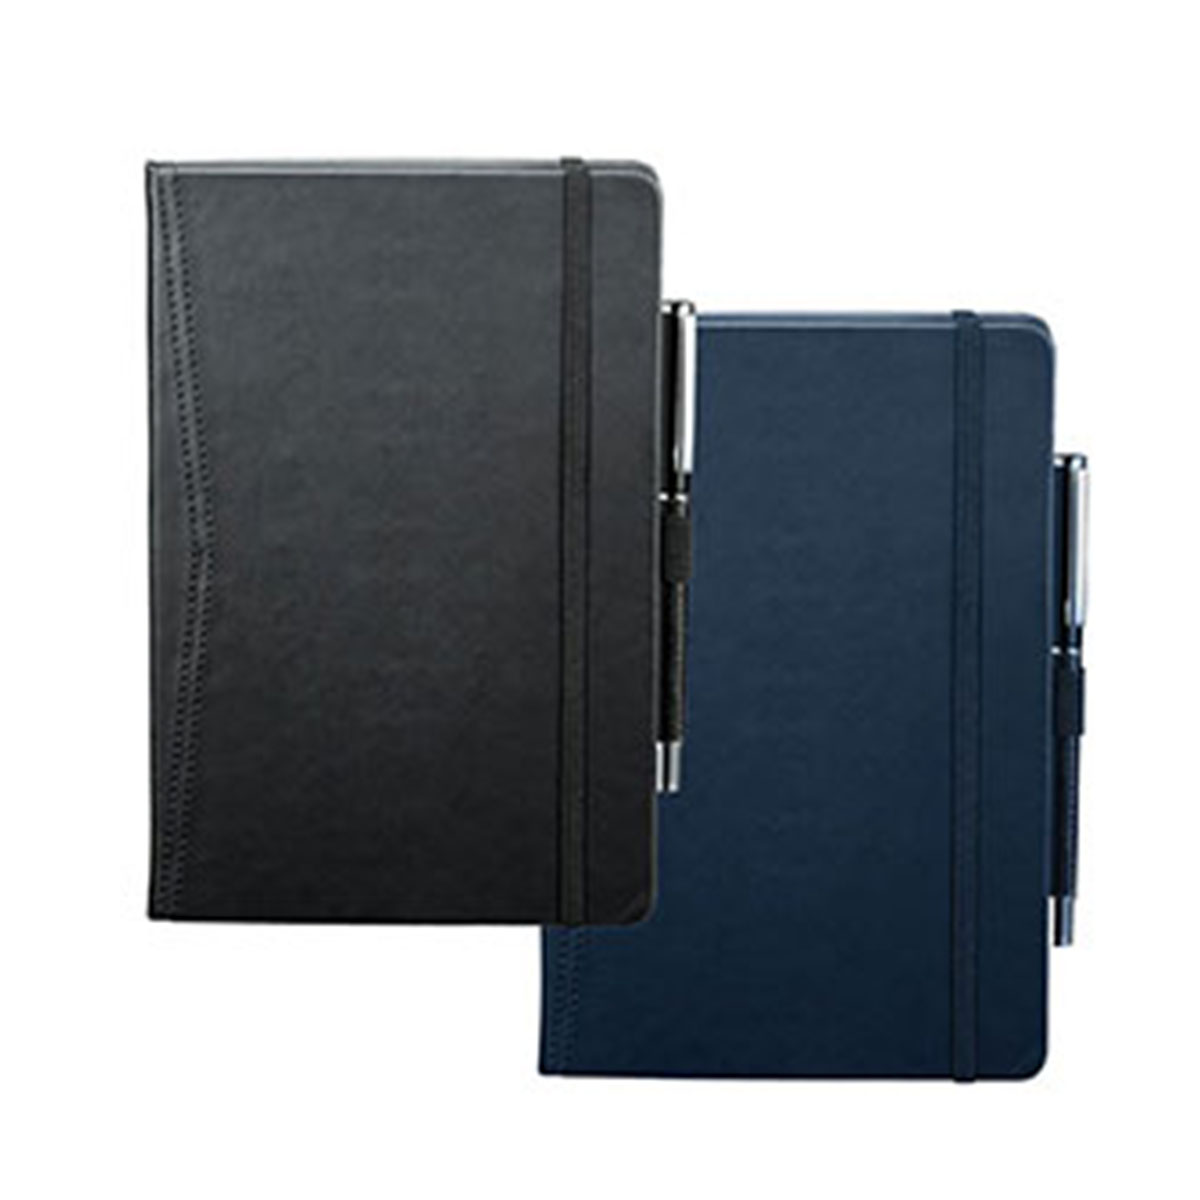 Pedova Pocket Bound Journal Book | Blue | Company Journal